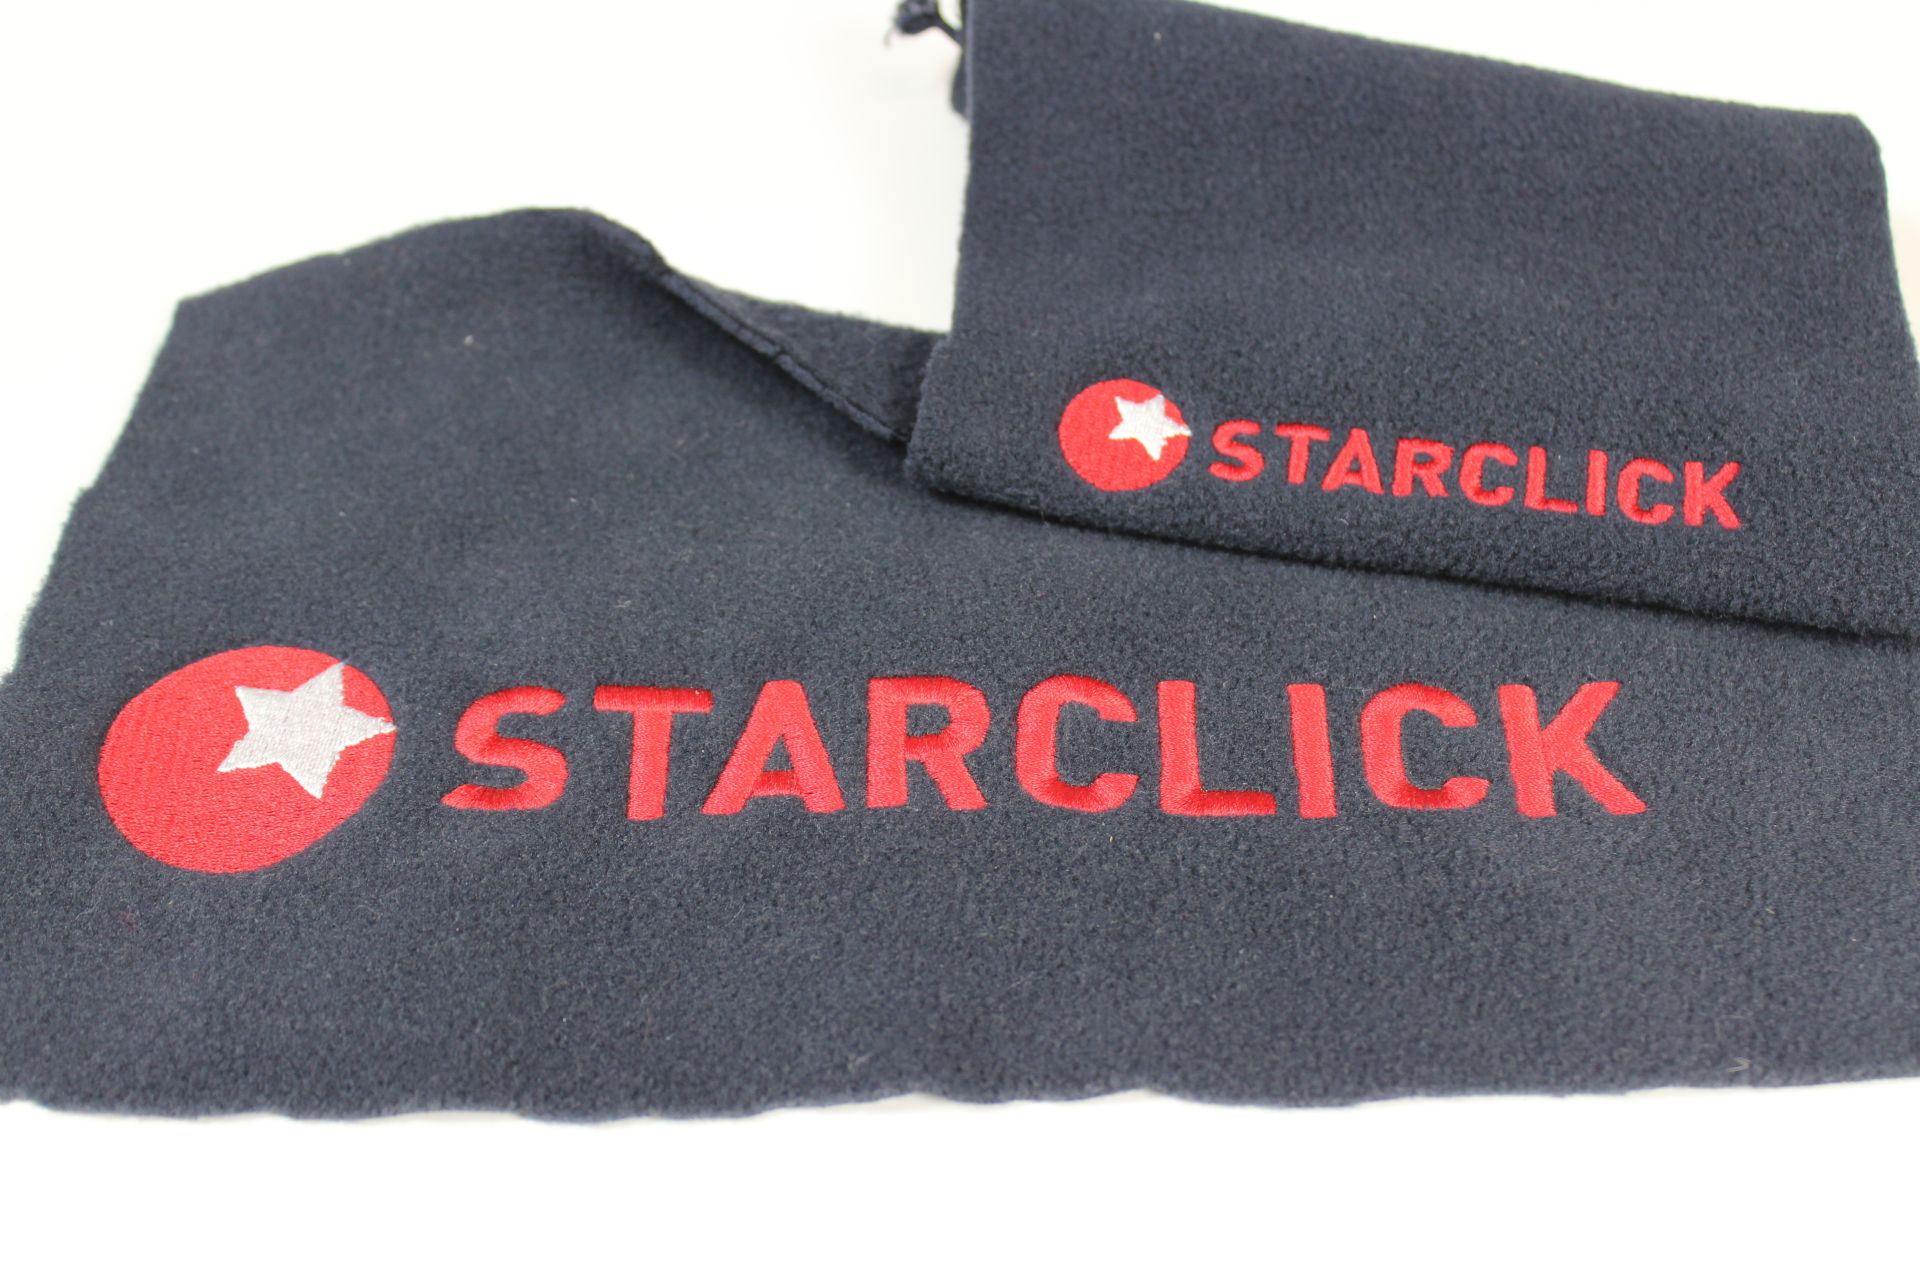 Stickmuster<br>Starcklick